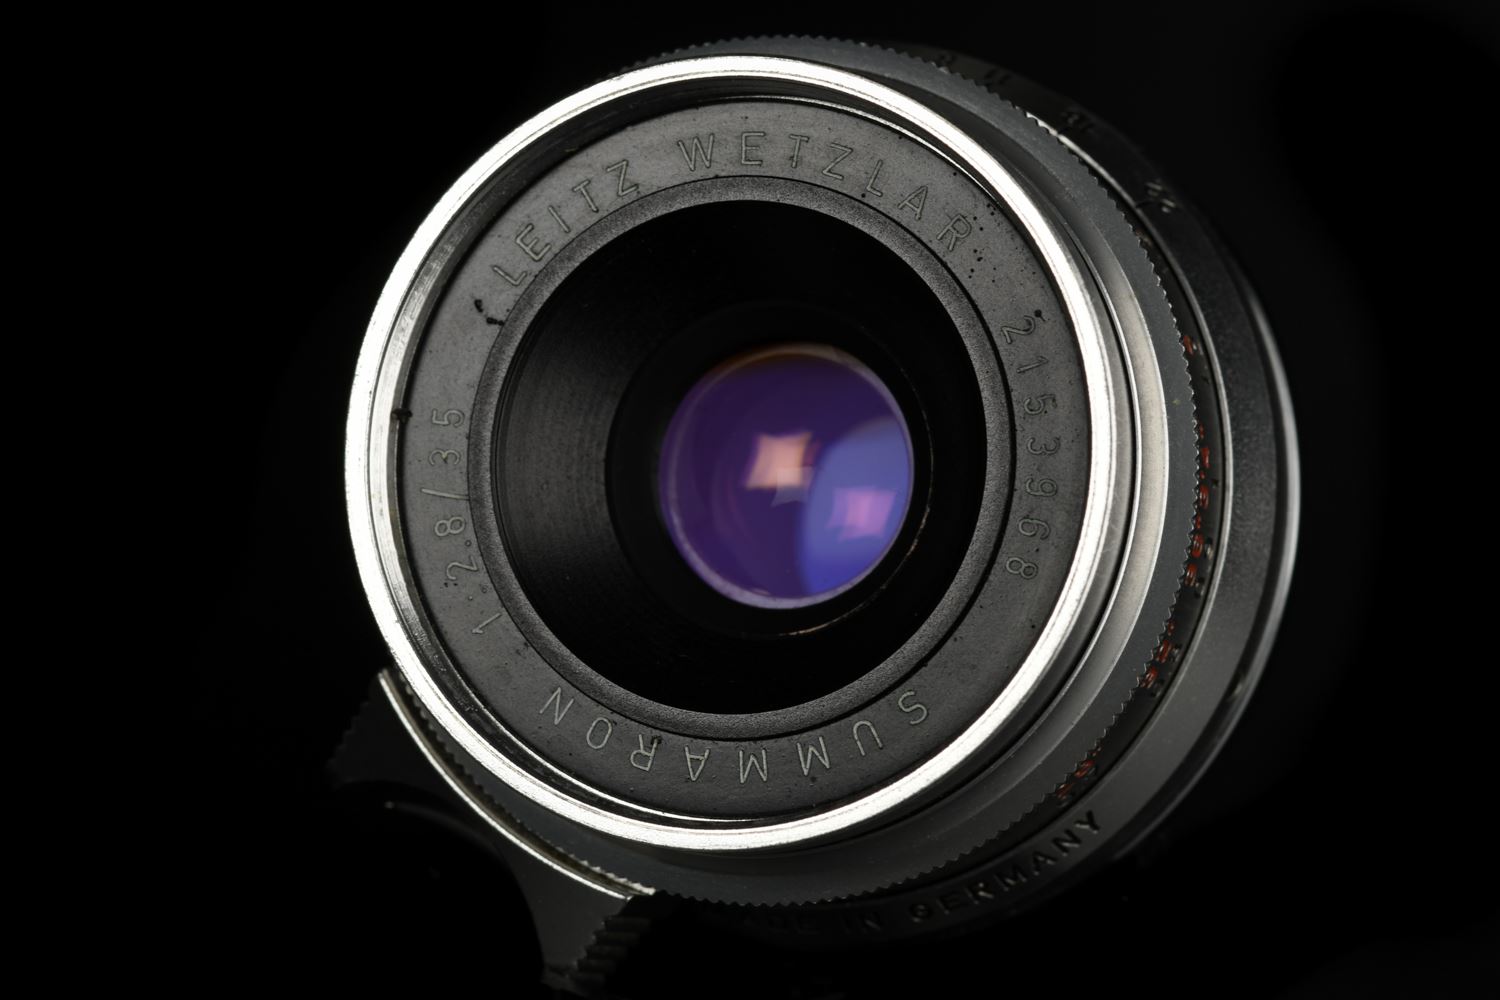 Picture of Leica Summaron 35mm f/2.8 Silver M2